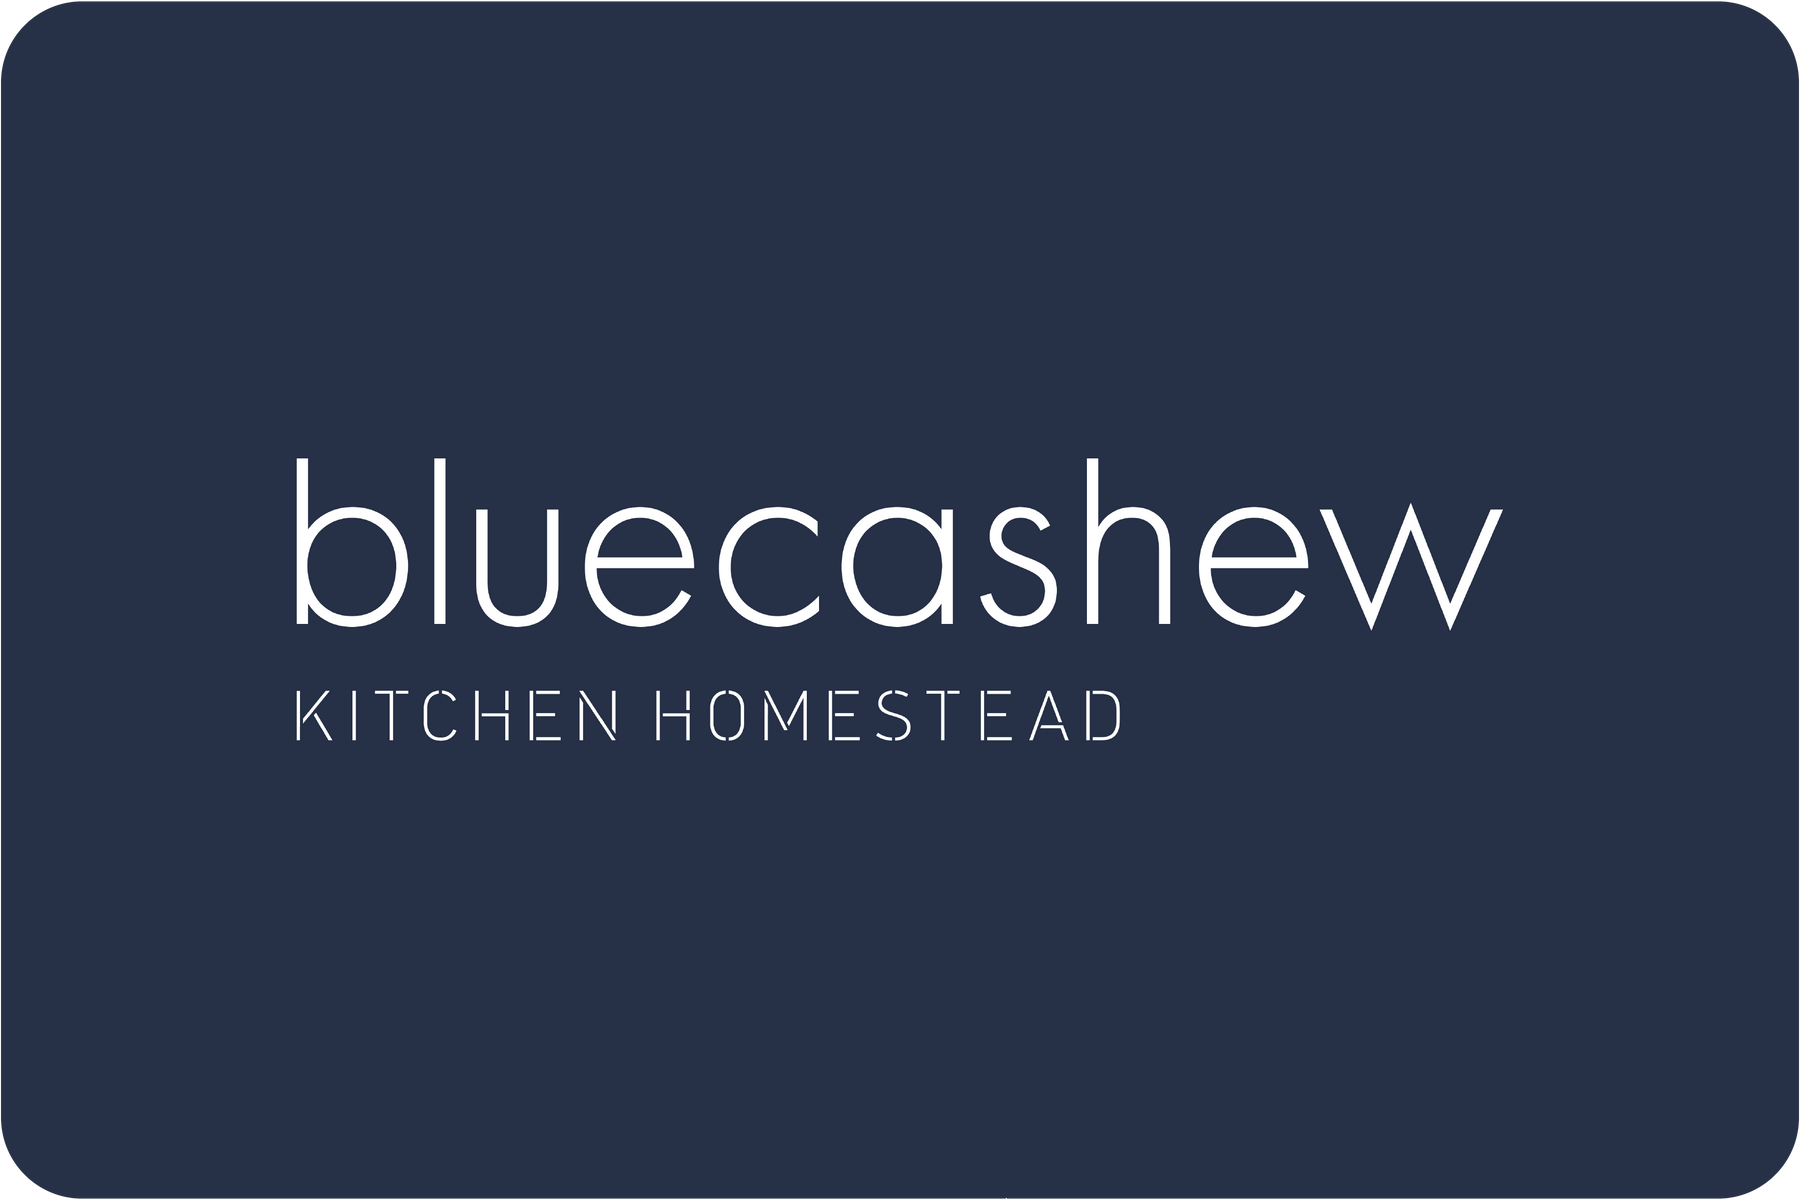 gift card to bluecashew kitchen homestead - bluecashew kitchen homestead -bluecashew kitchen homestead